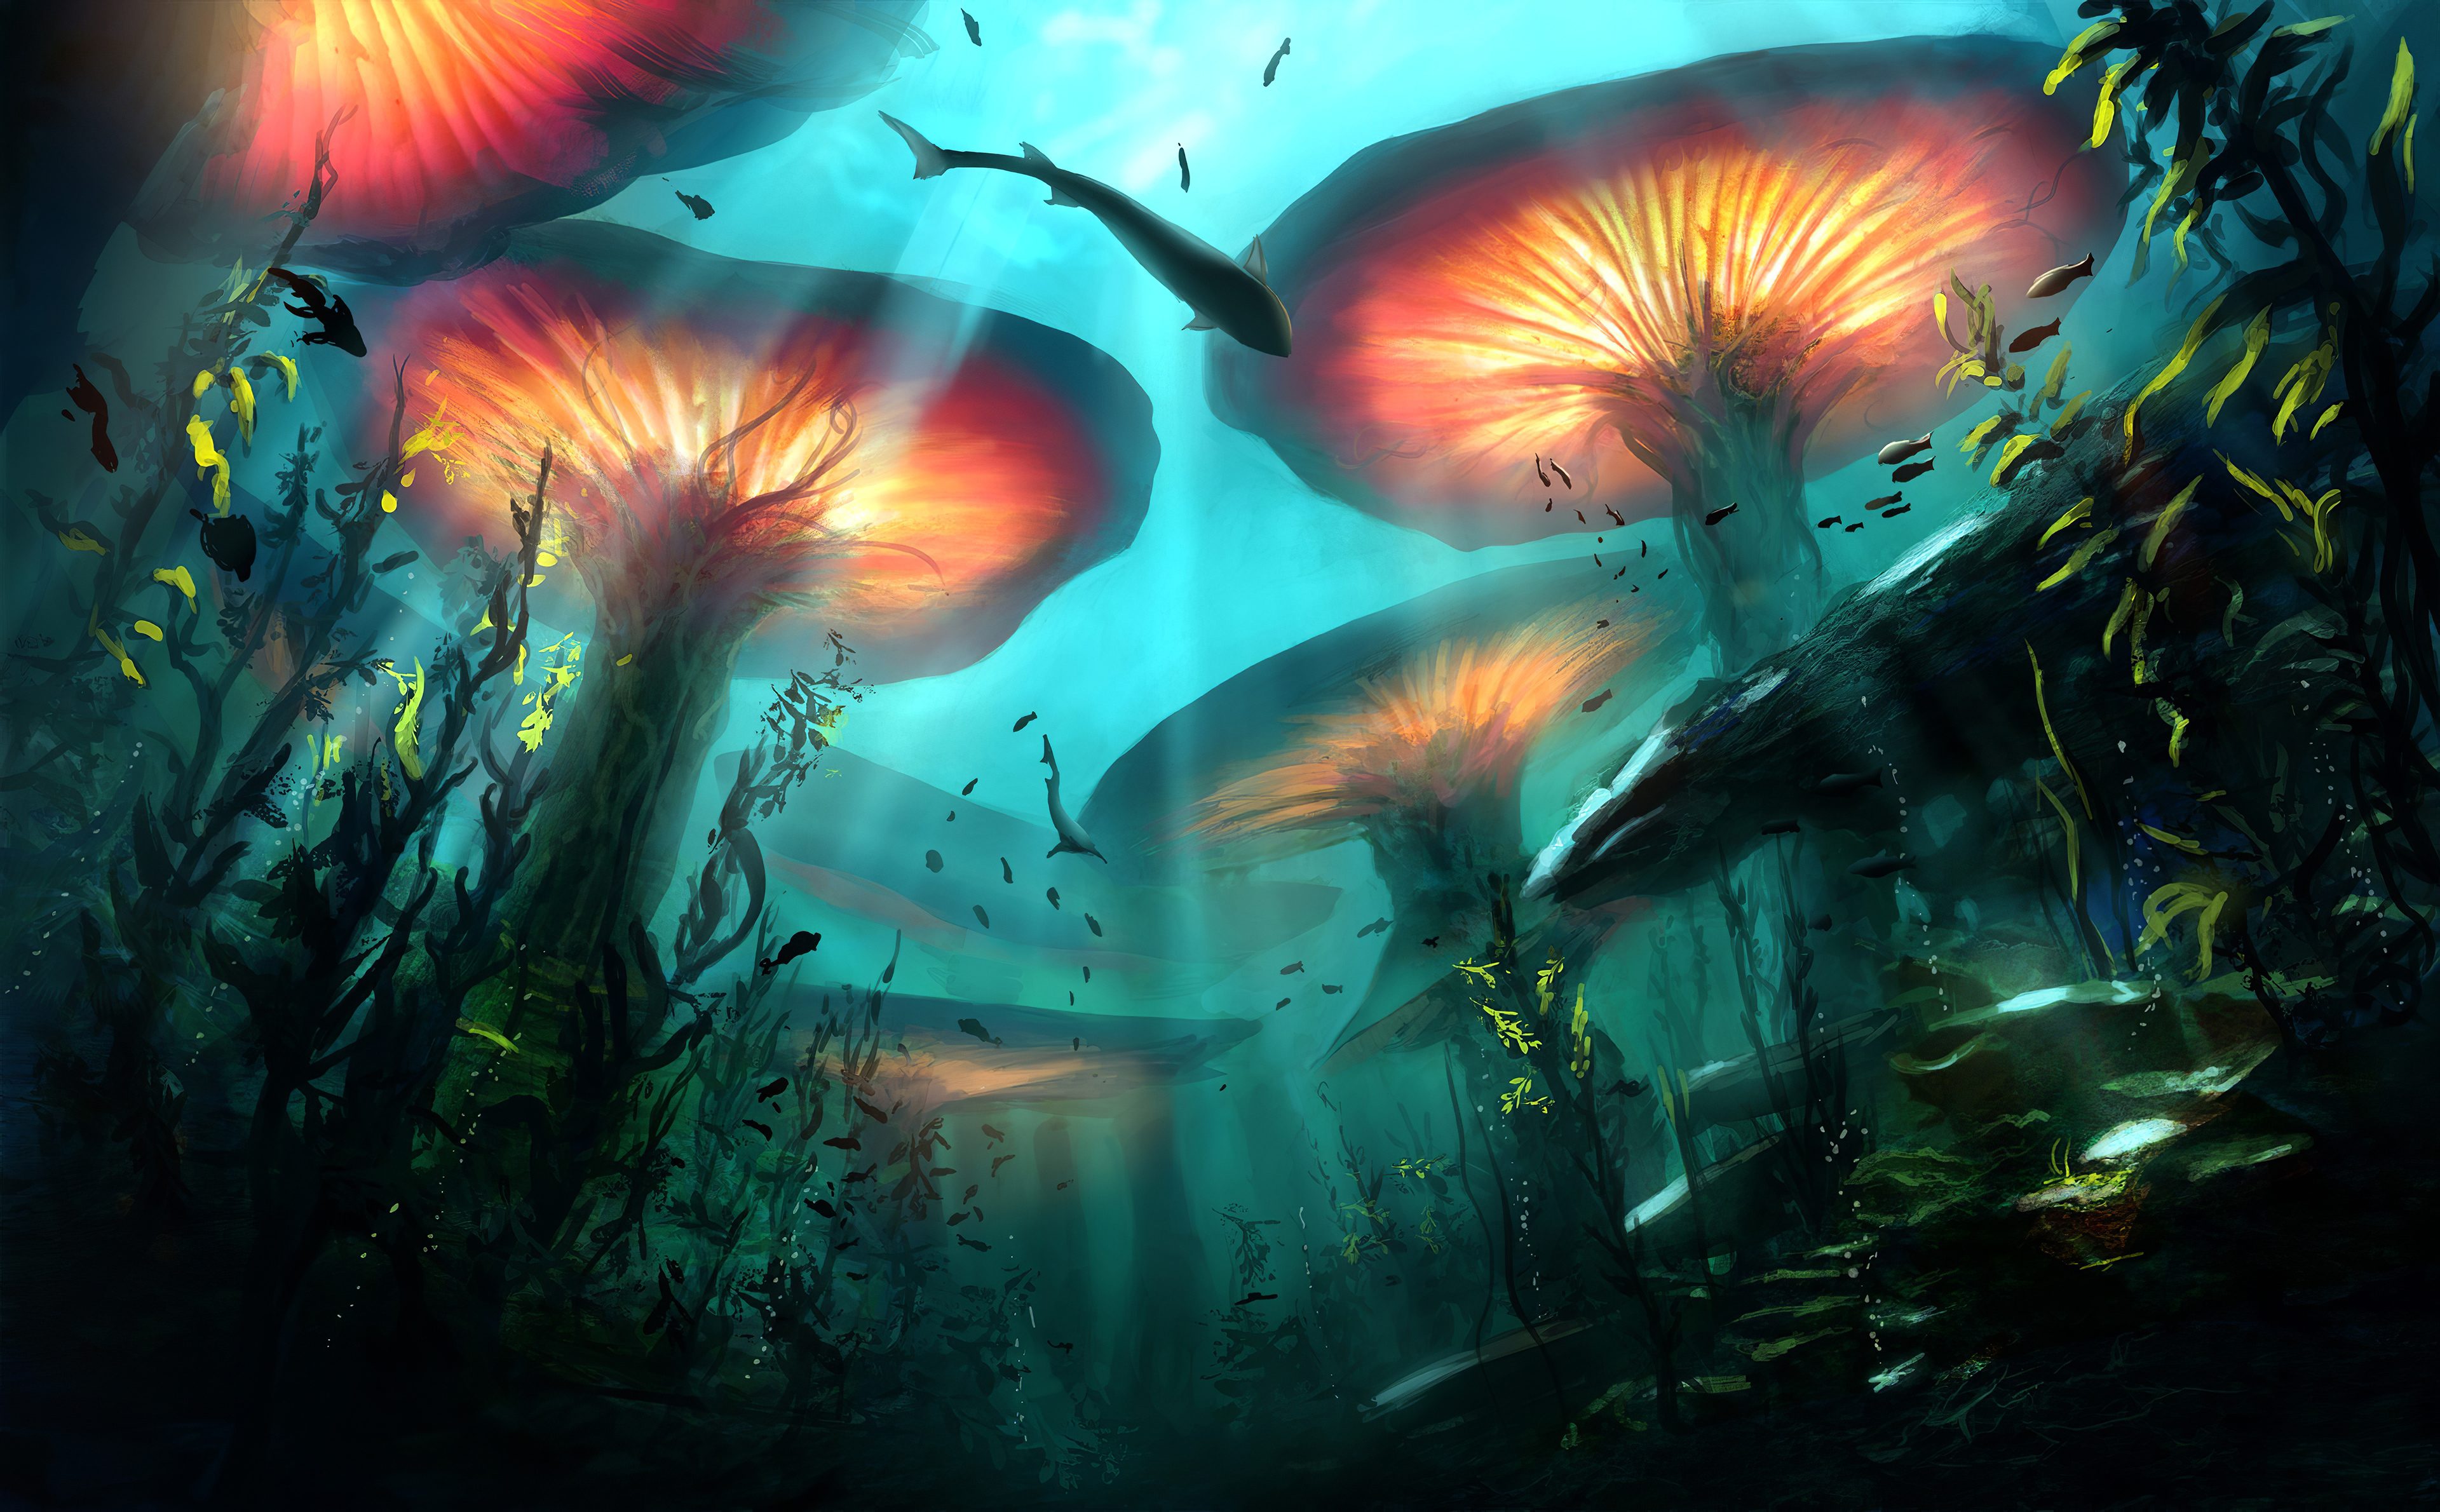 Underwater Nature Digital Art 4k Wallpaper,HD Artist Wallpapers,4k